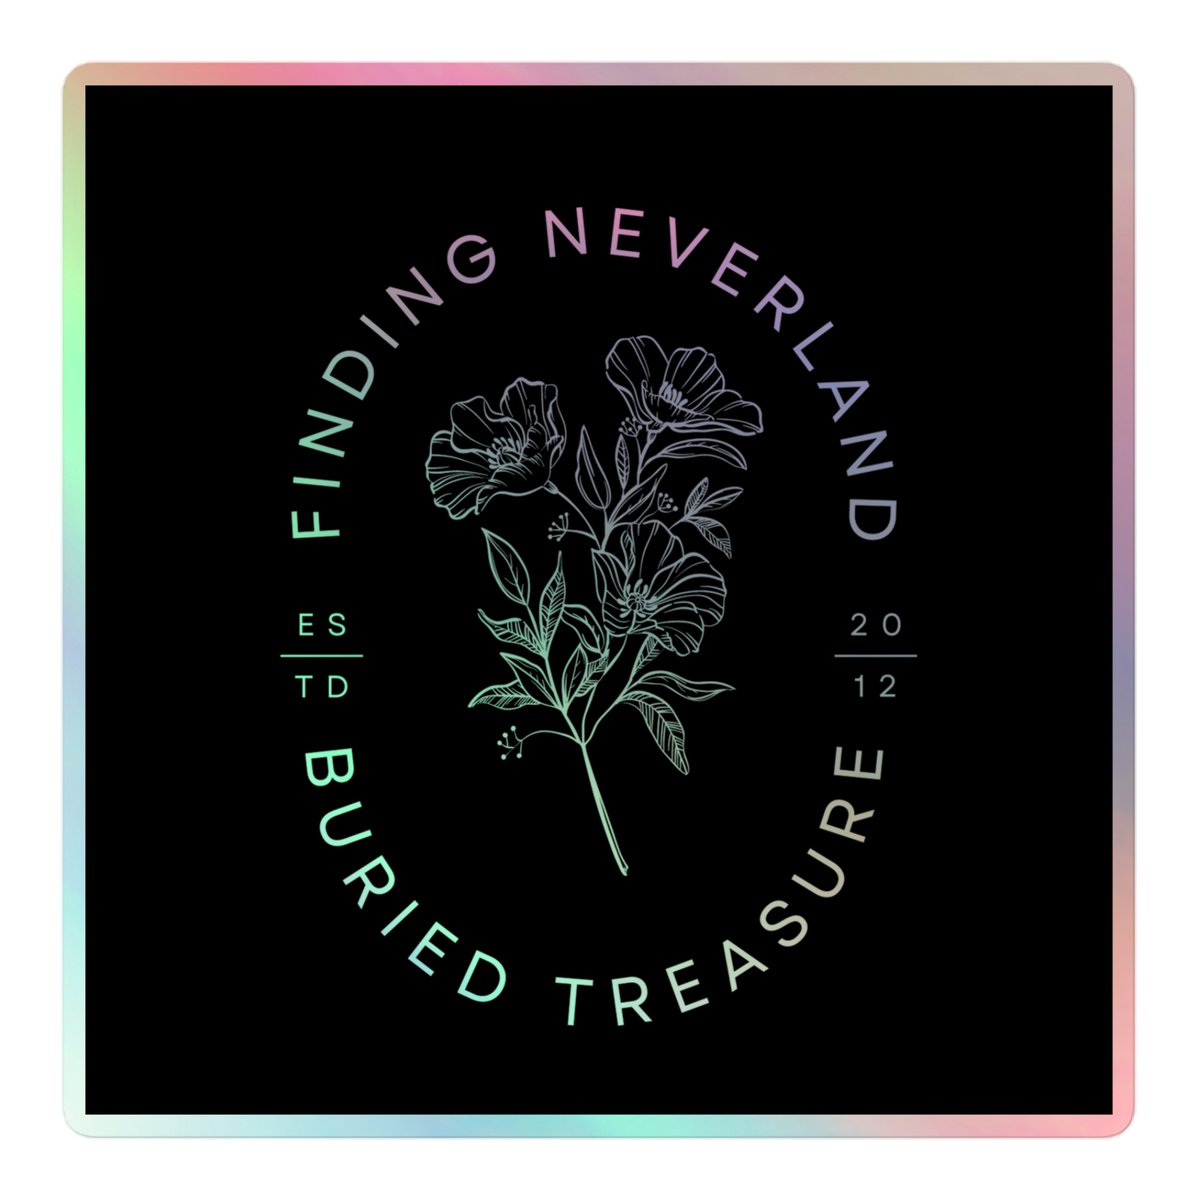 FN "Buried Treasure" sticker